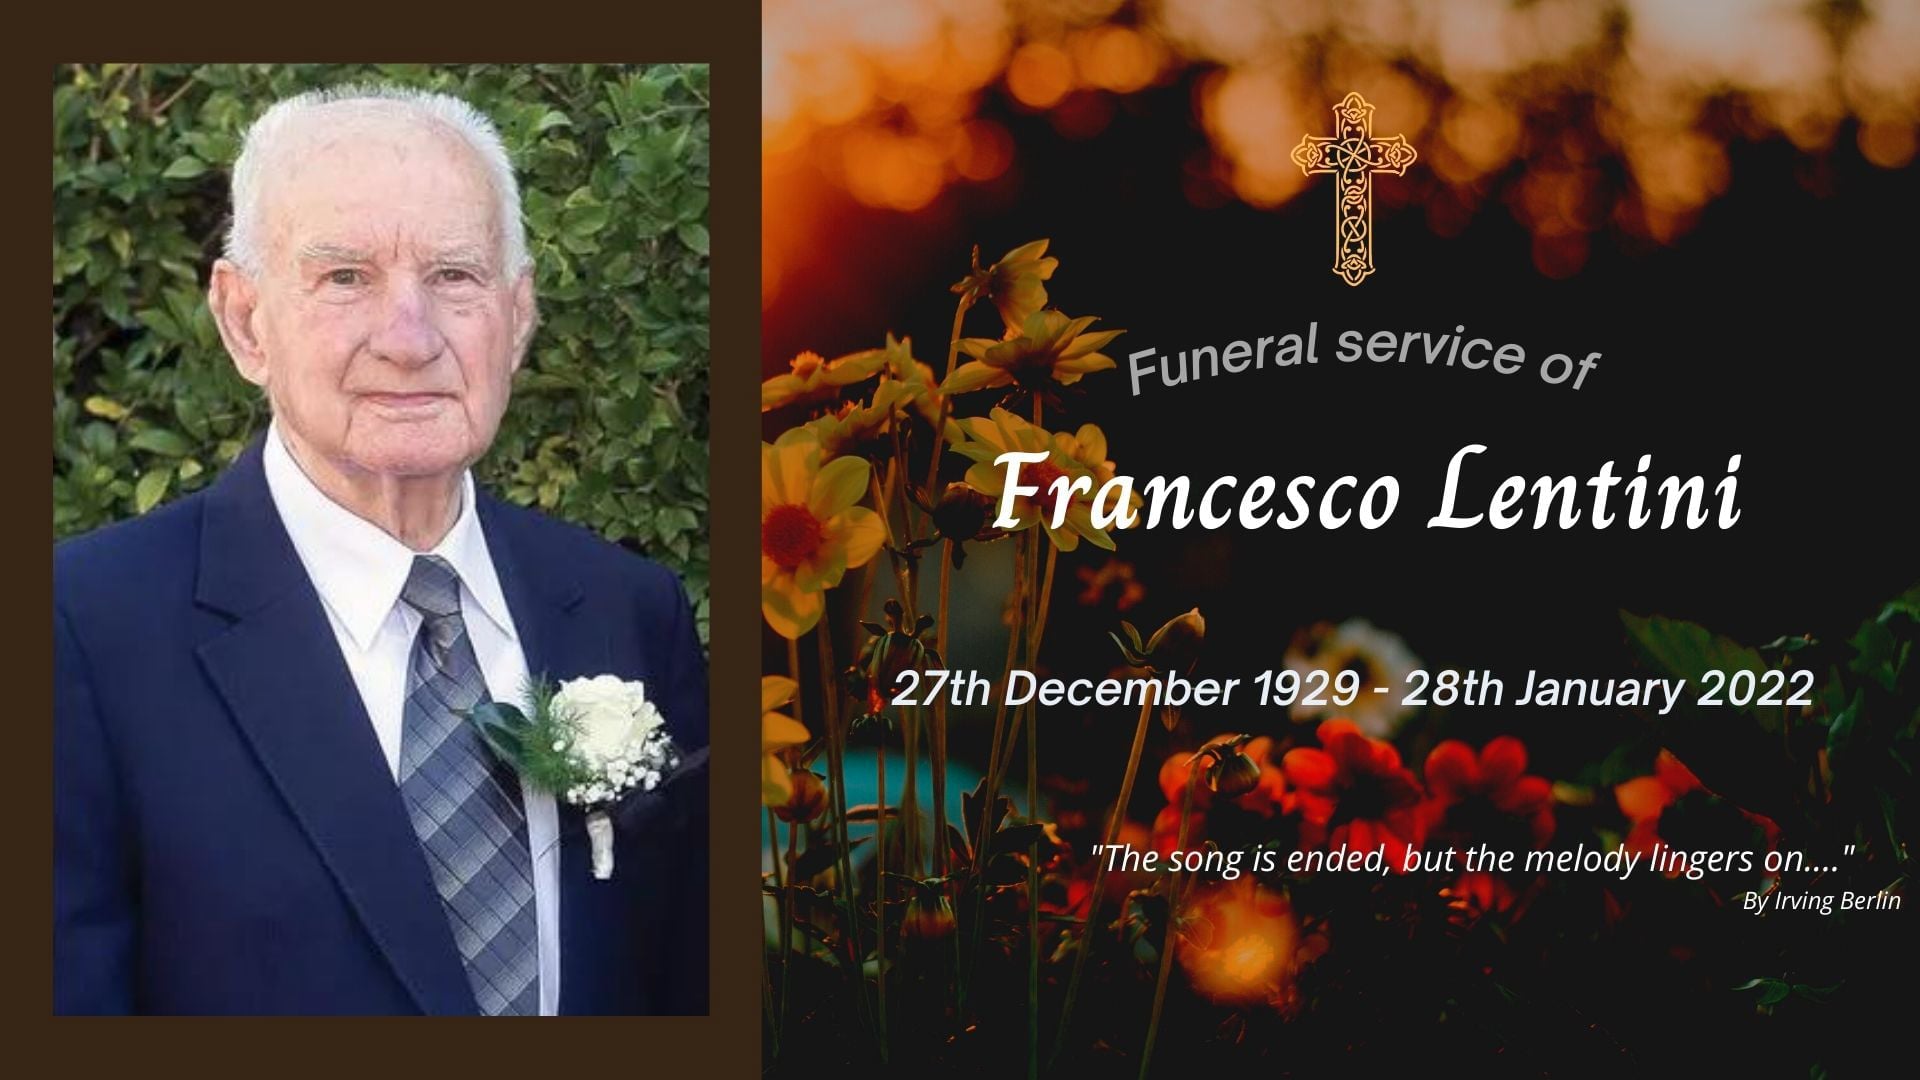 Funeral service of the late Francesco Lentini